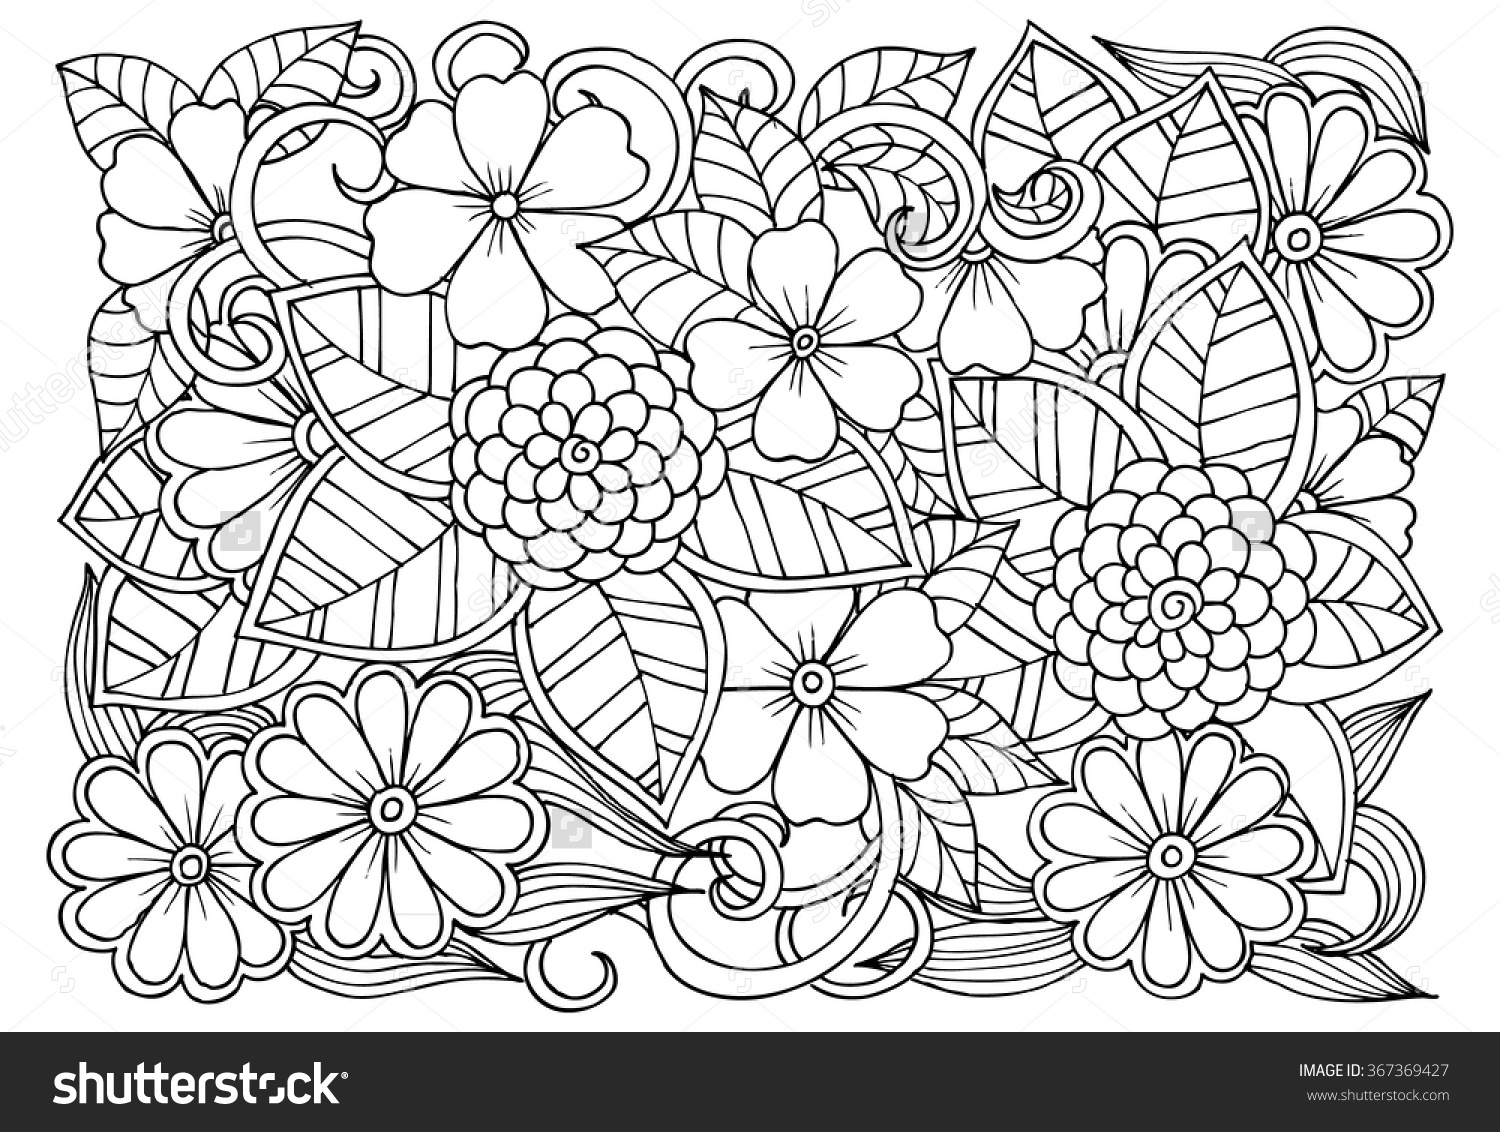 Carpet Of Leaves coloring #19, Download drawings